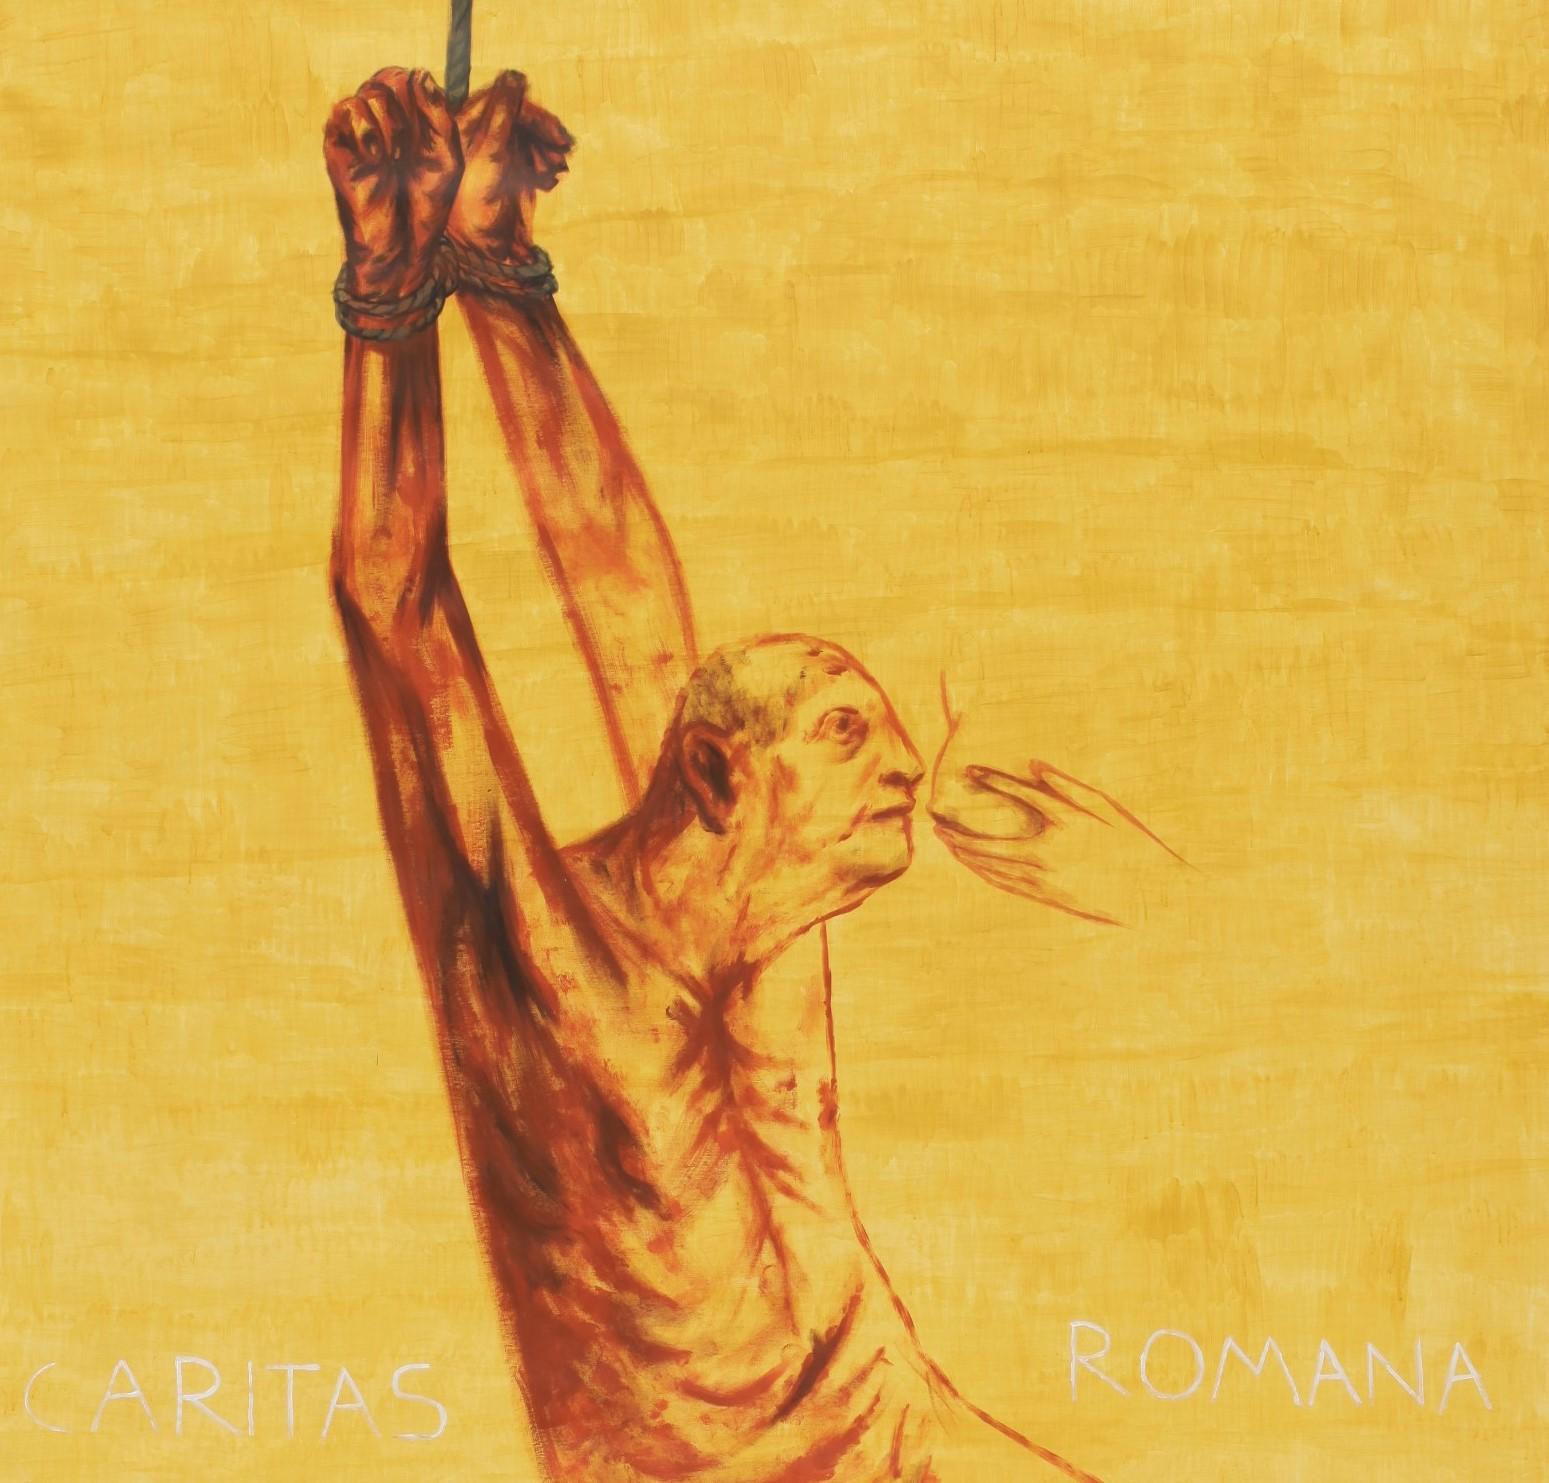 caritas romana painting